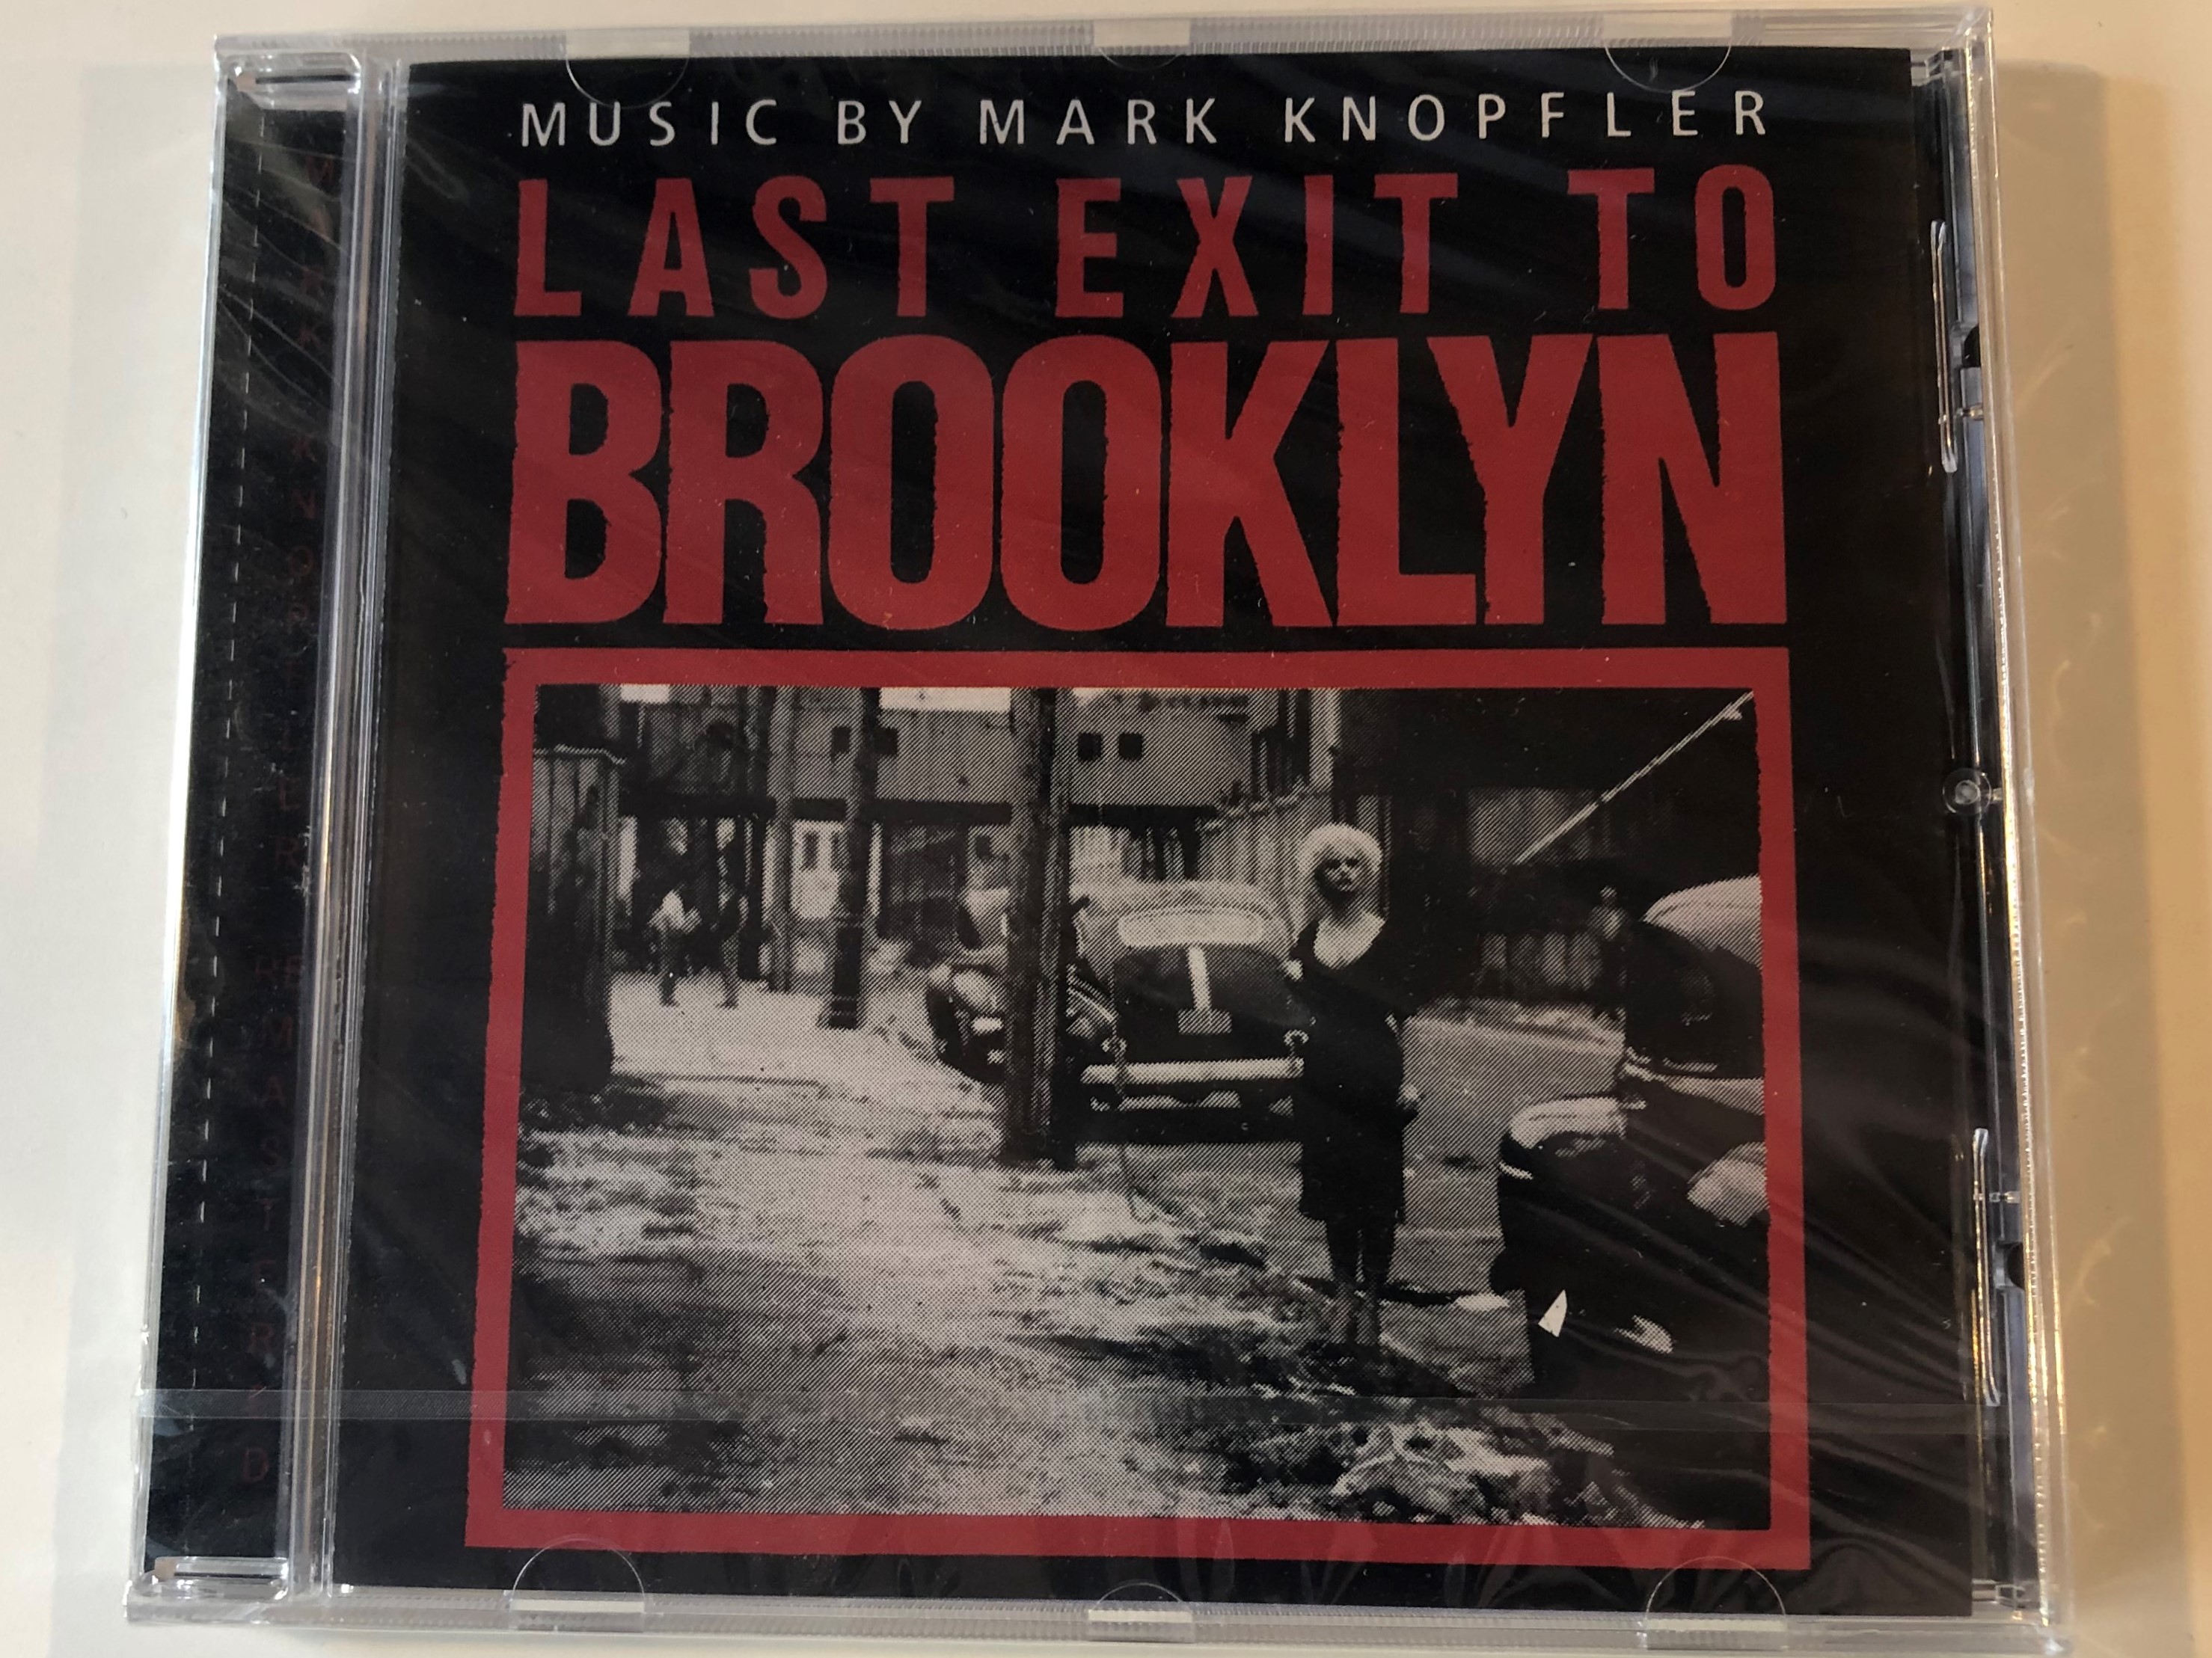 music-by-mark-knopfler-last-exit-to-brooklyn-mercury-records-ltd.-audio-cd-1997-838-725-2-1-.jpg